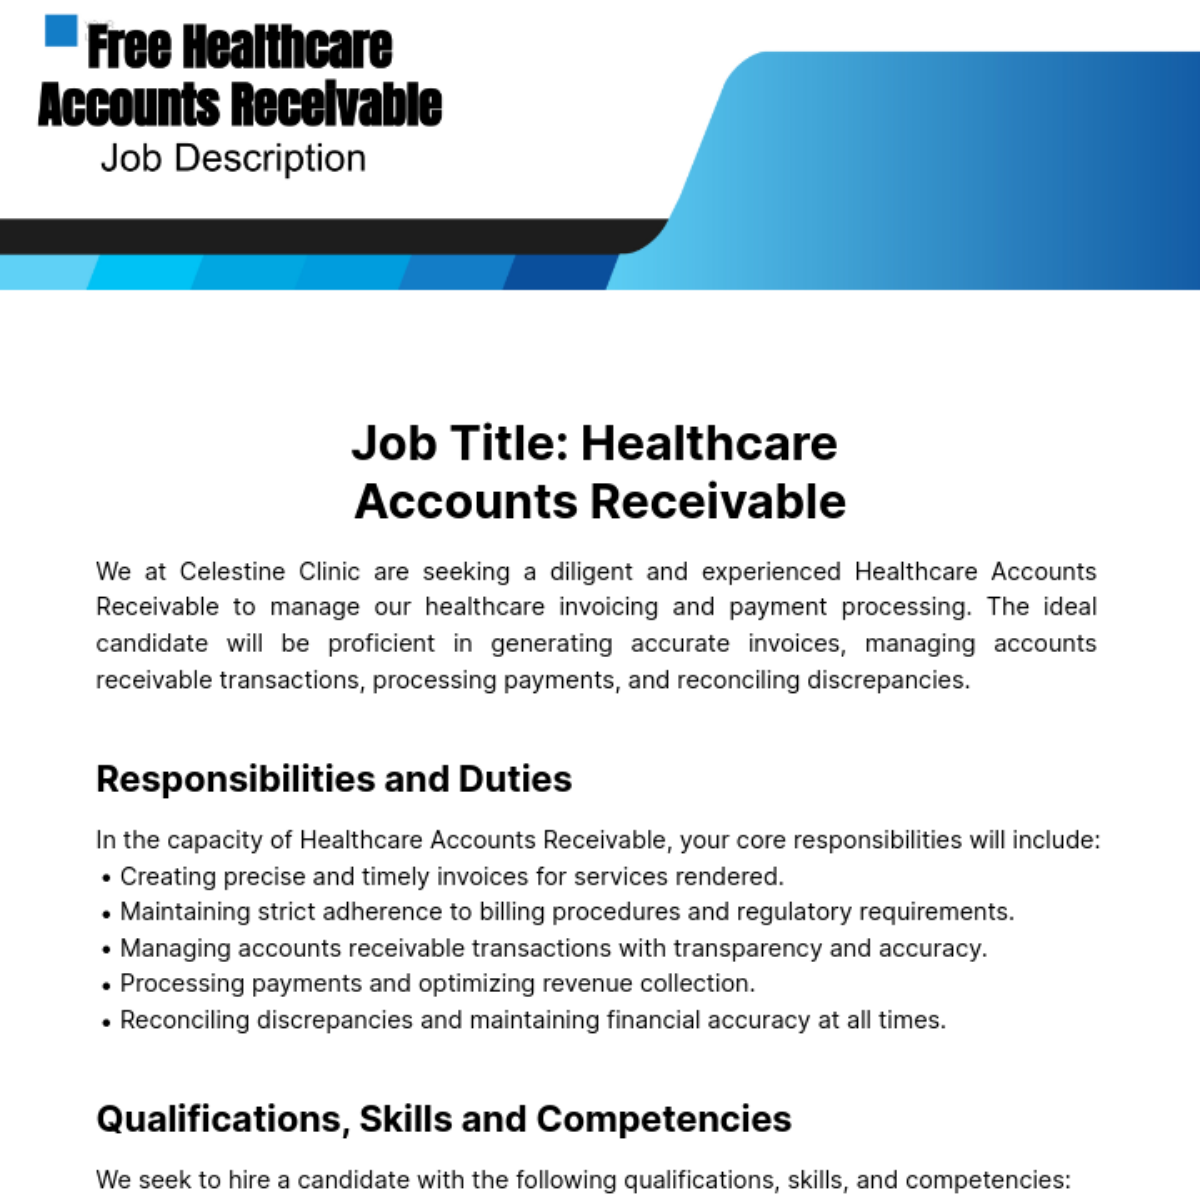 Free Healthcare Accounts Receivable Job Description Template